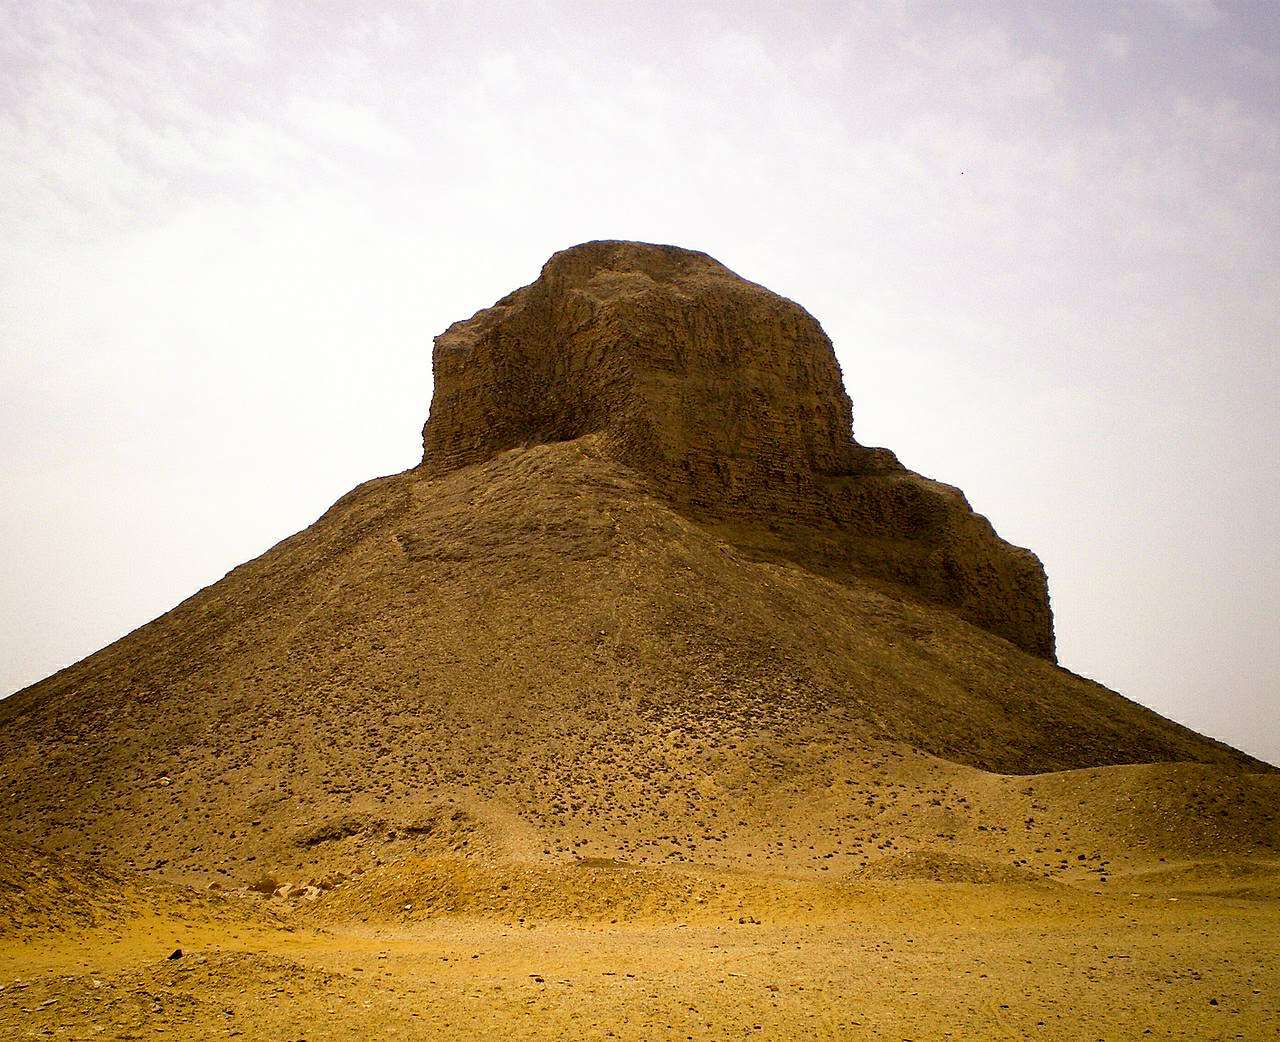 The Black Pyramid at Dahsur.